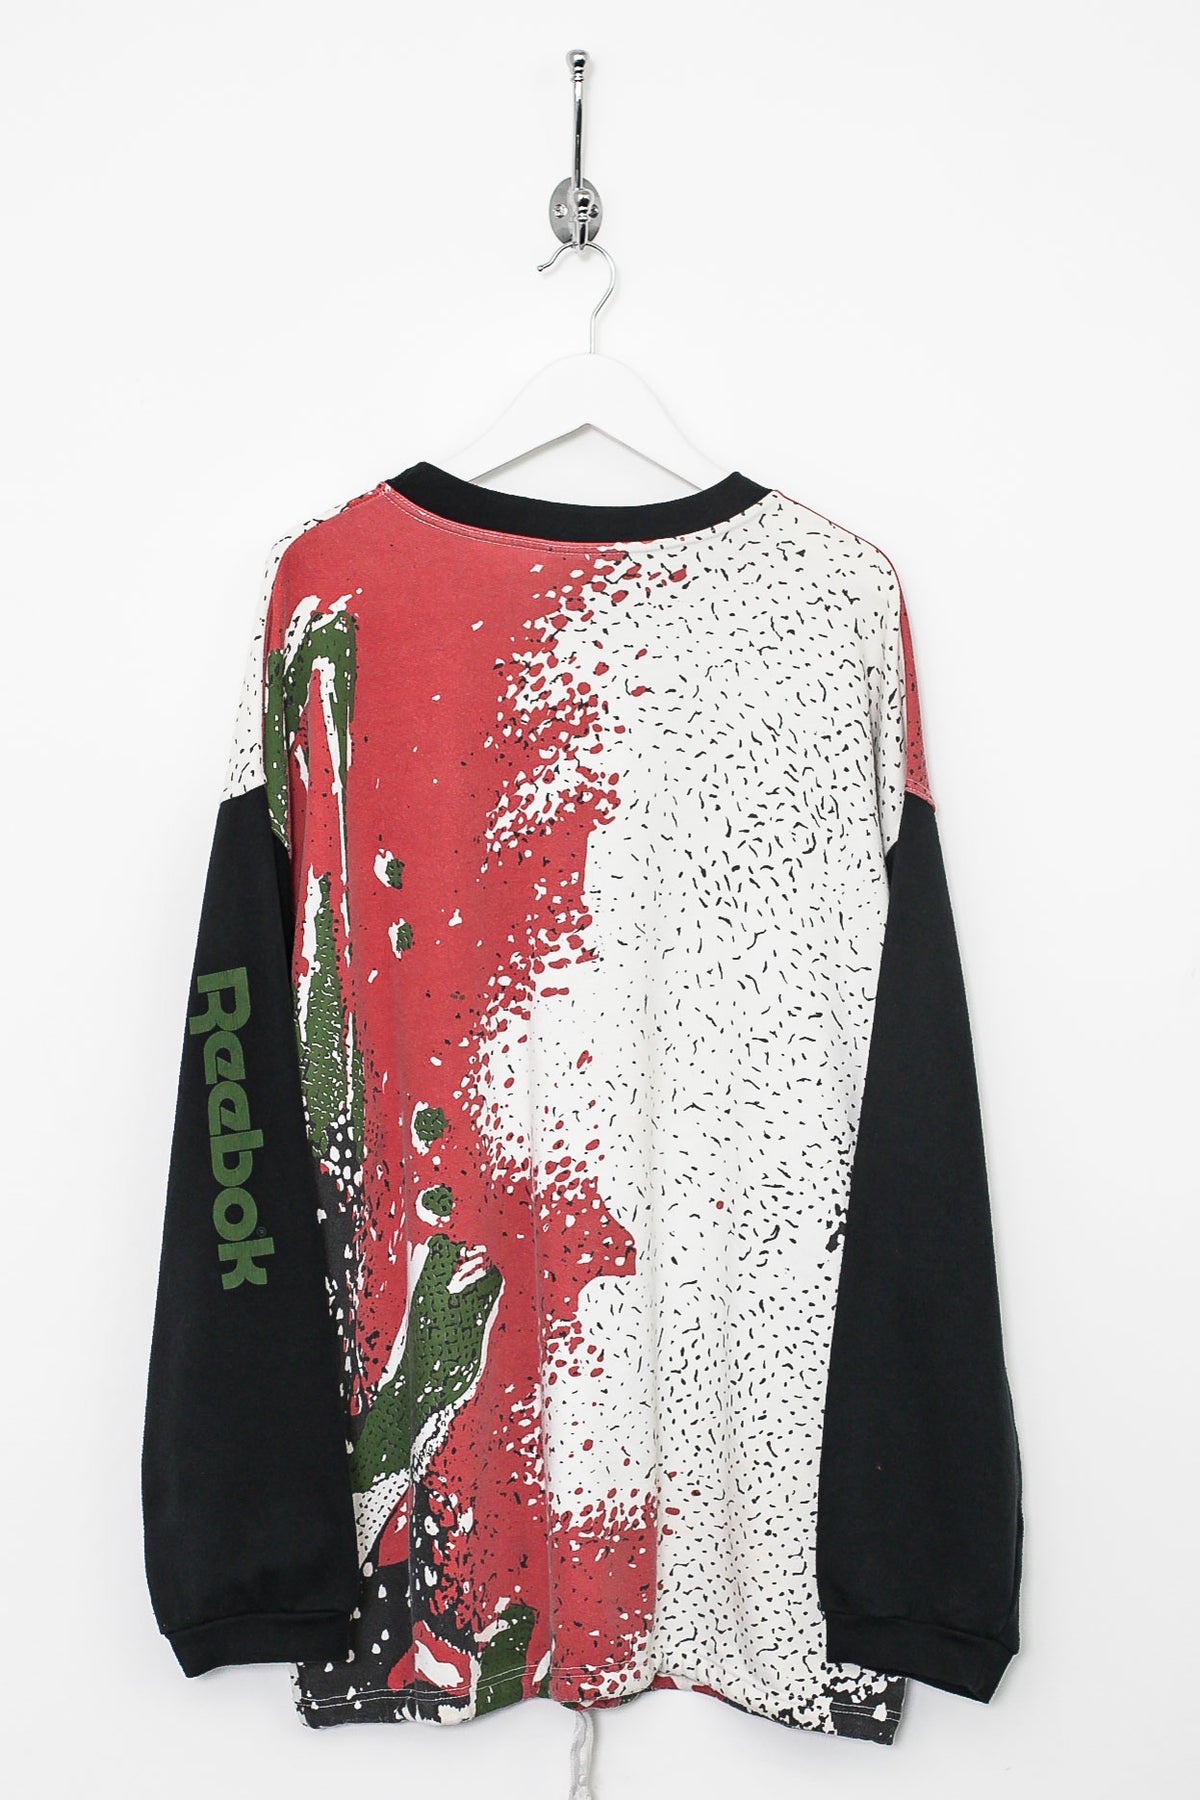 90s Reebok Blacktop Sweatshirt (L)